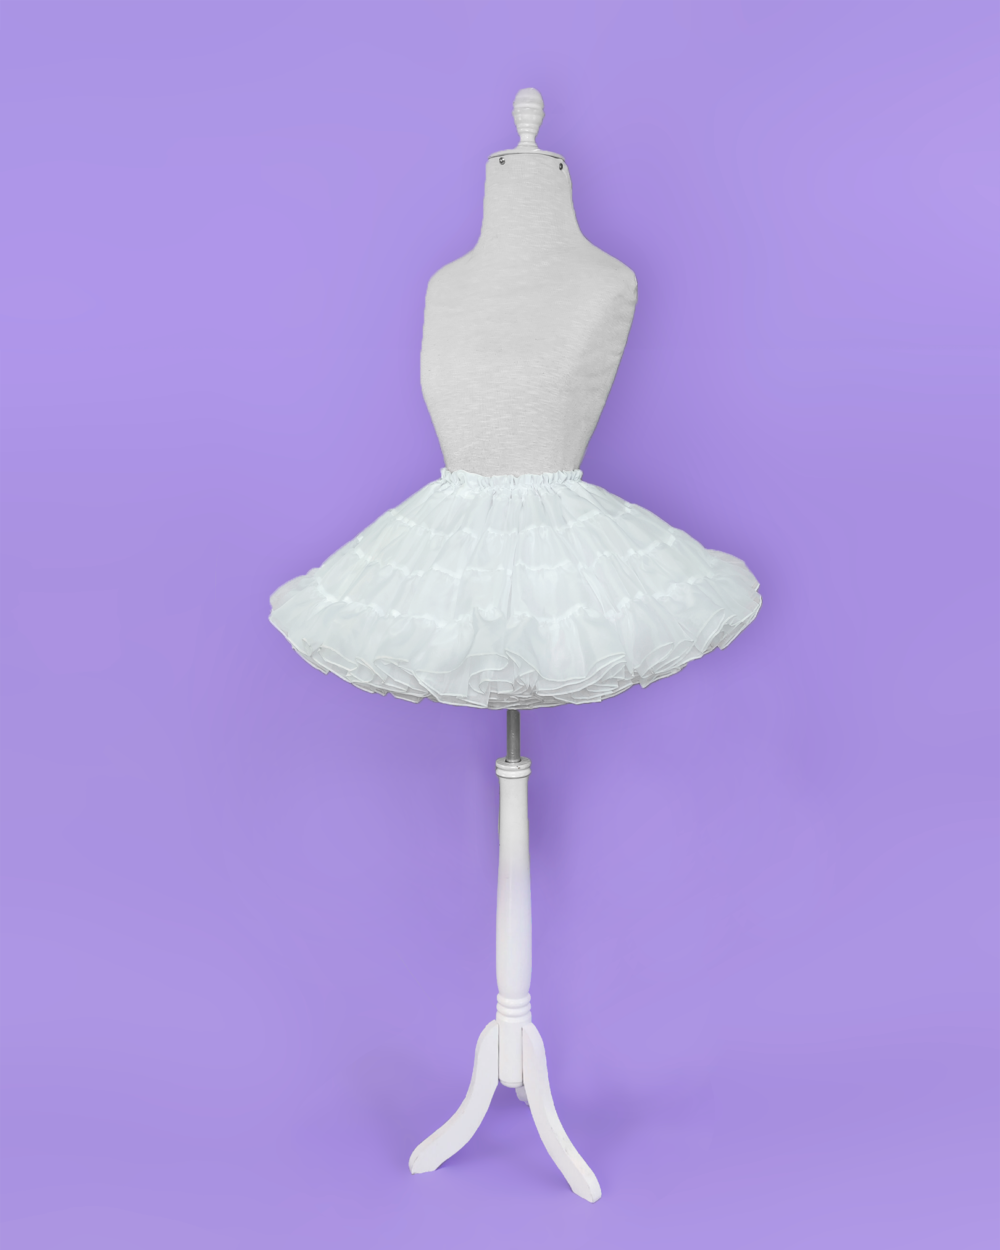 A-line petticoat by MeLikesTea